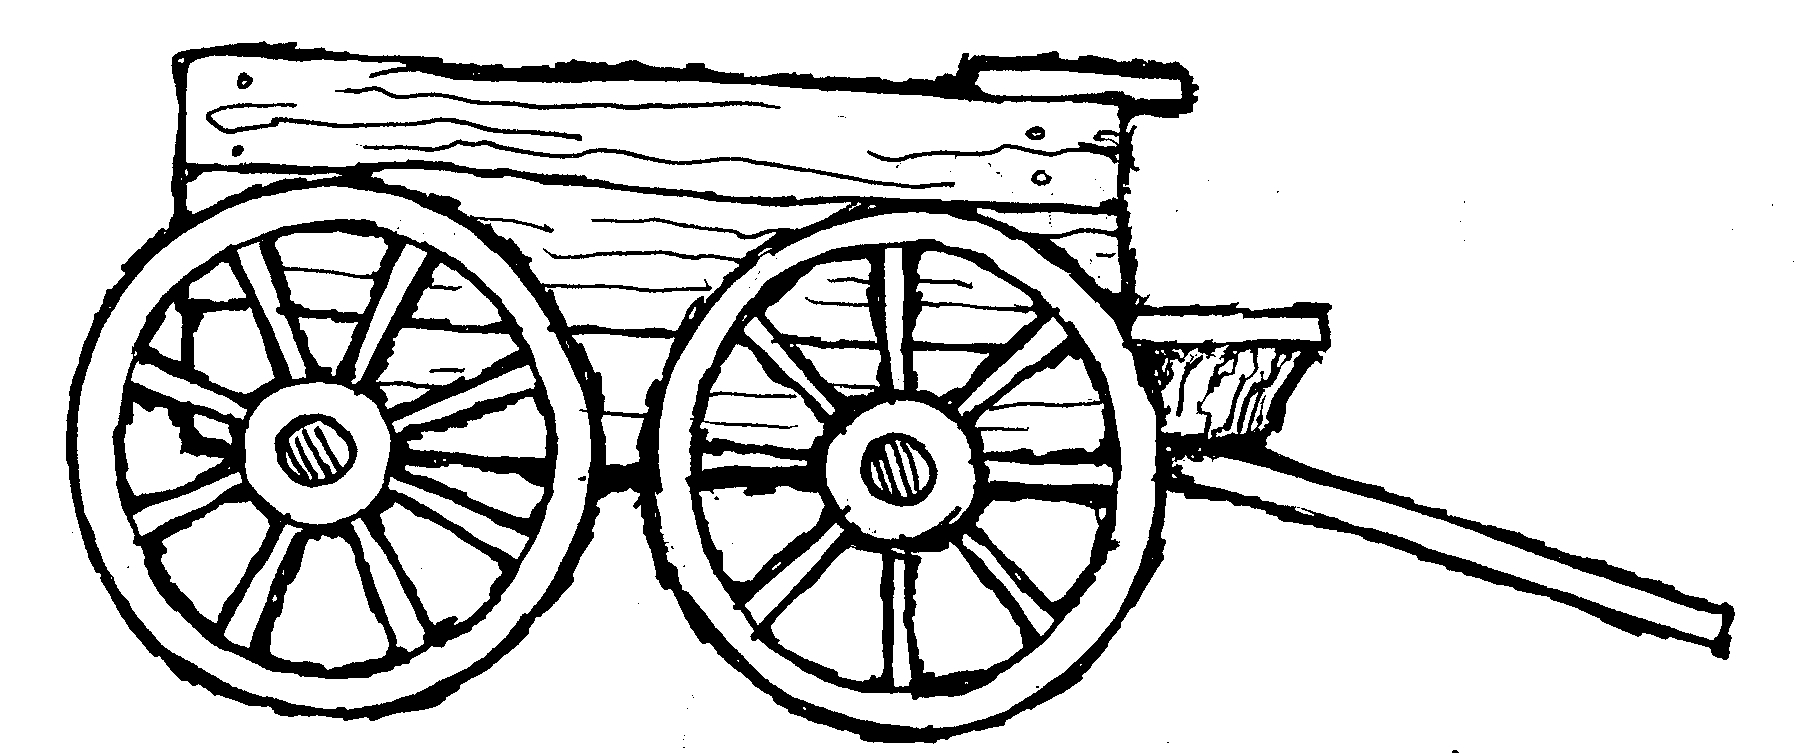 Free pioneer handcart.